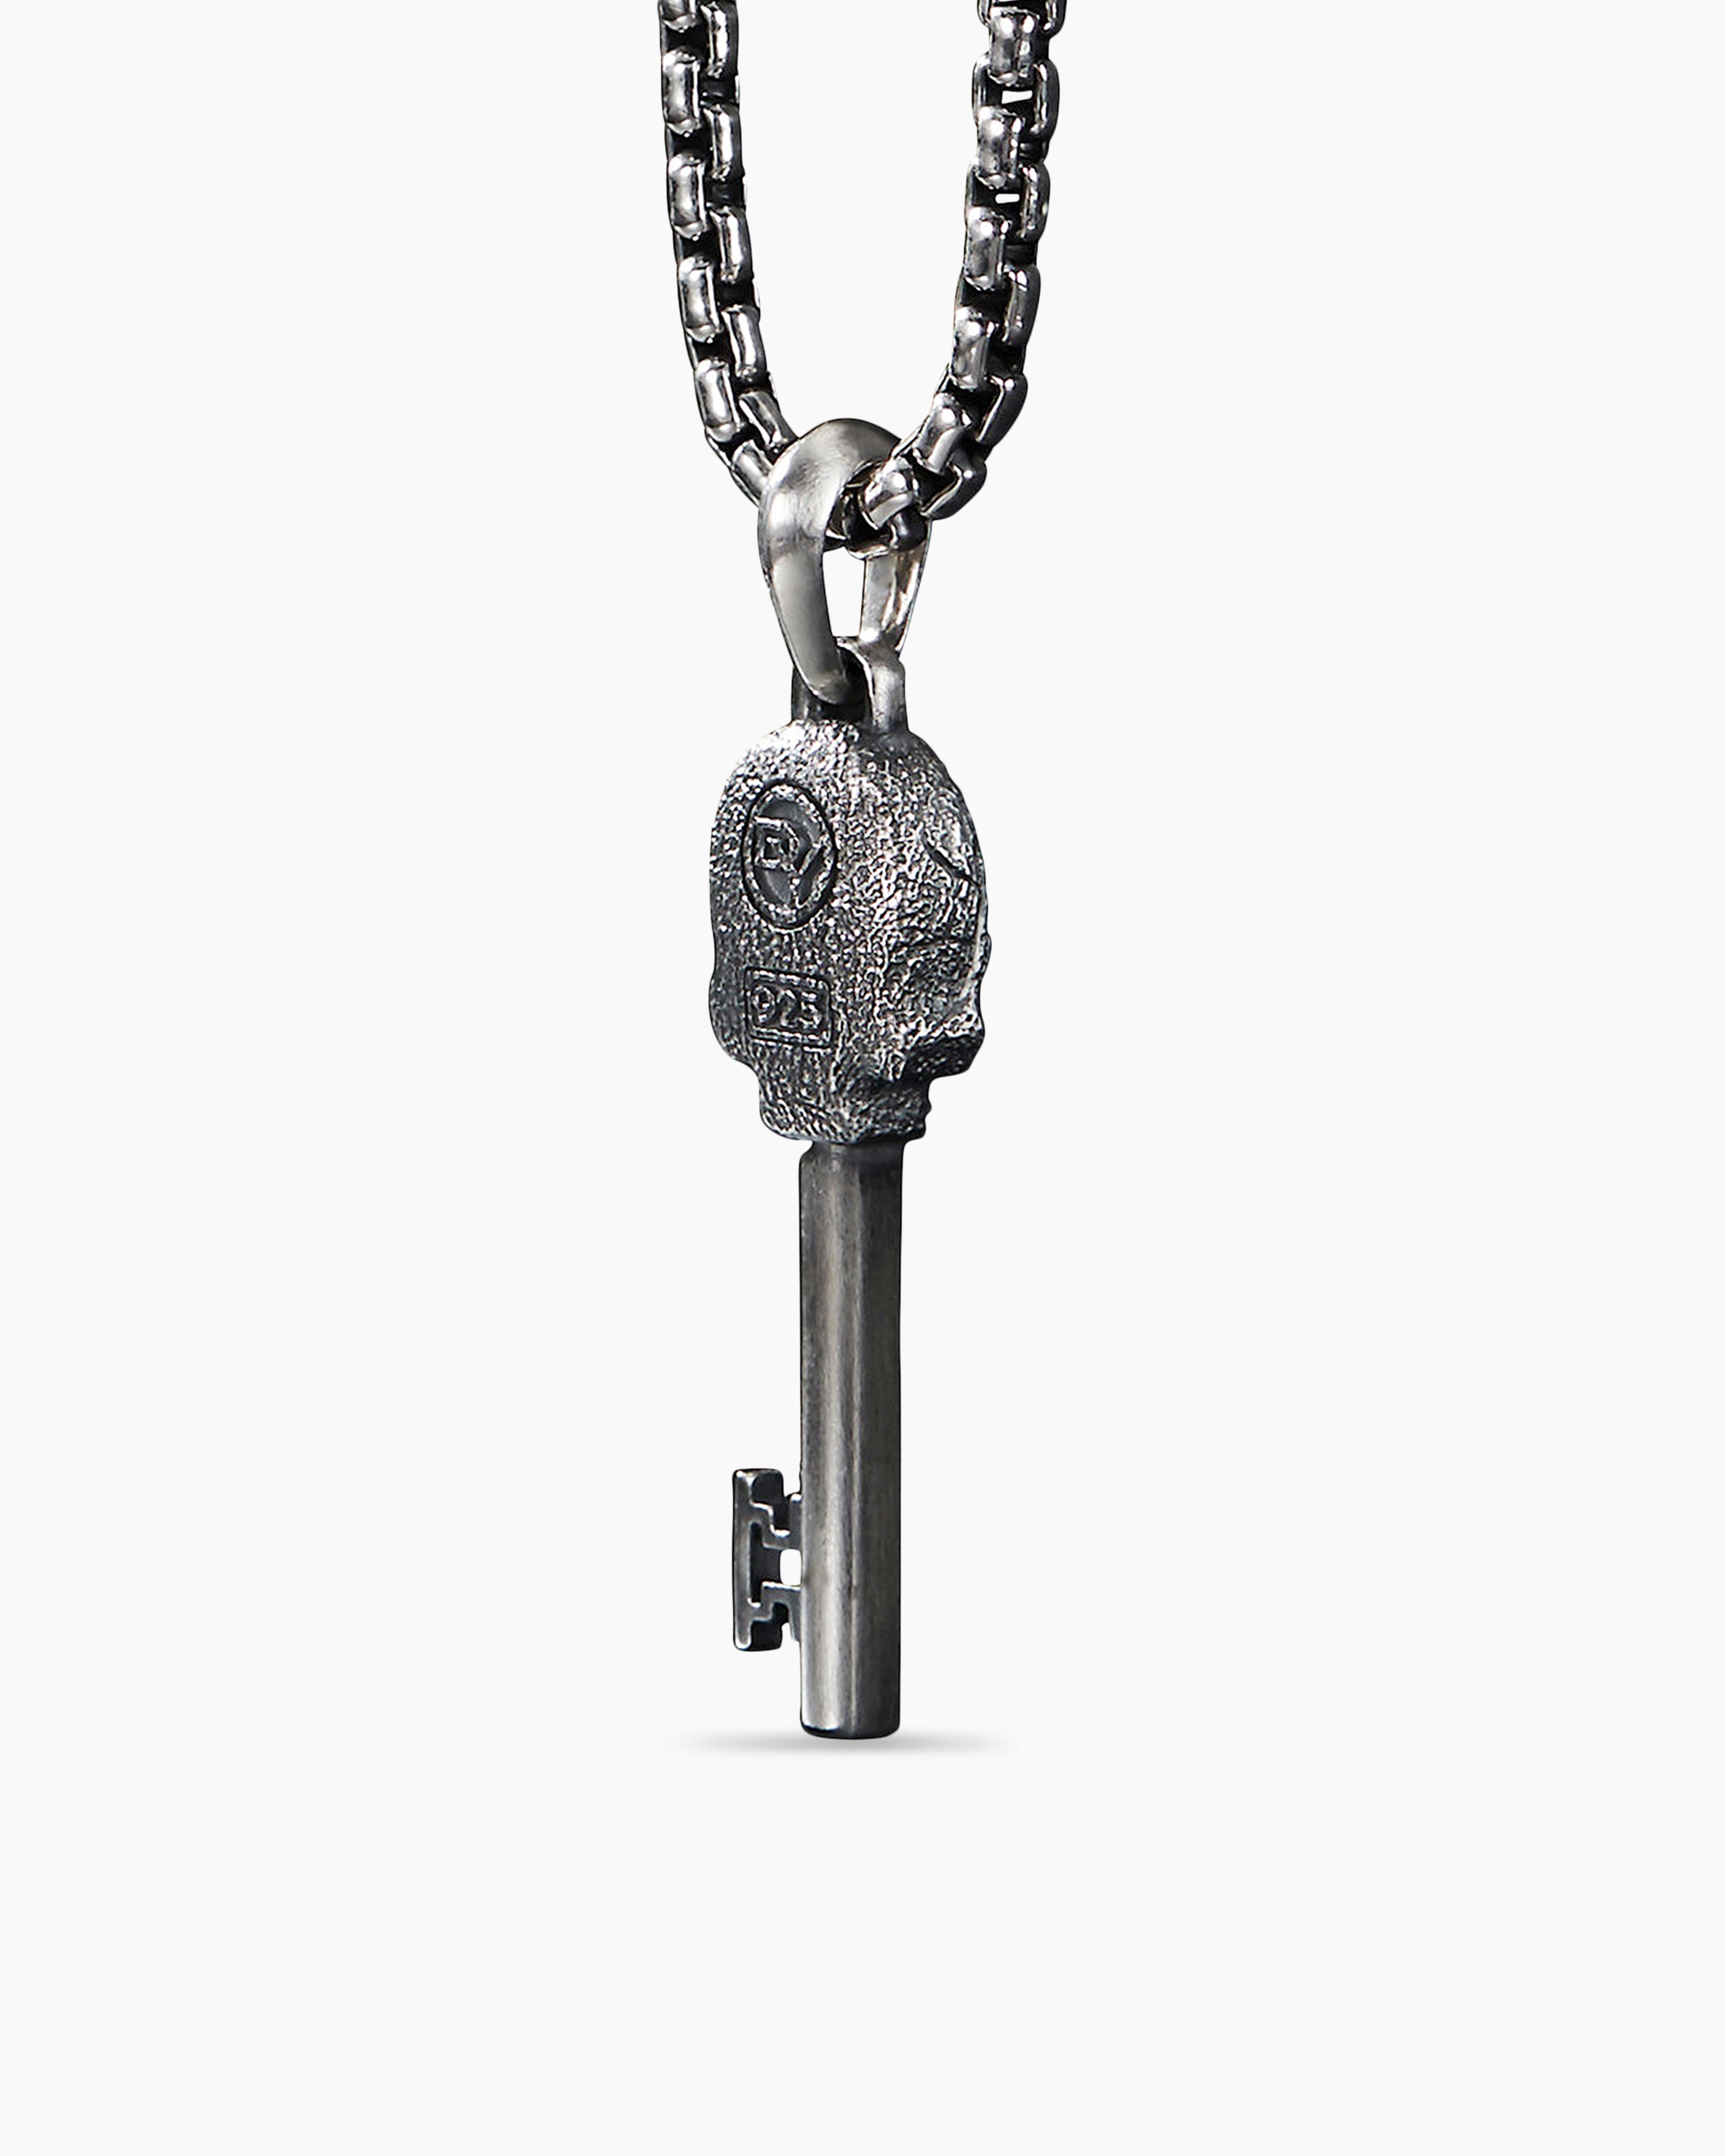 Dainty Gold Key Pendant Womens Key Necklace Antique Gold Key - Etsy |  Unique gifts for women, Key pendant, Key necklace